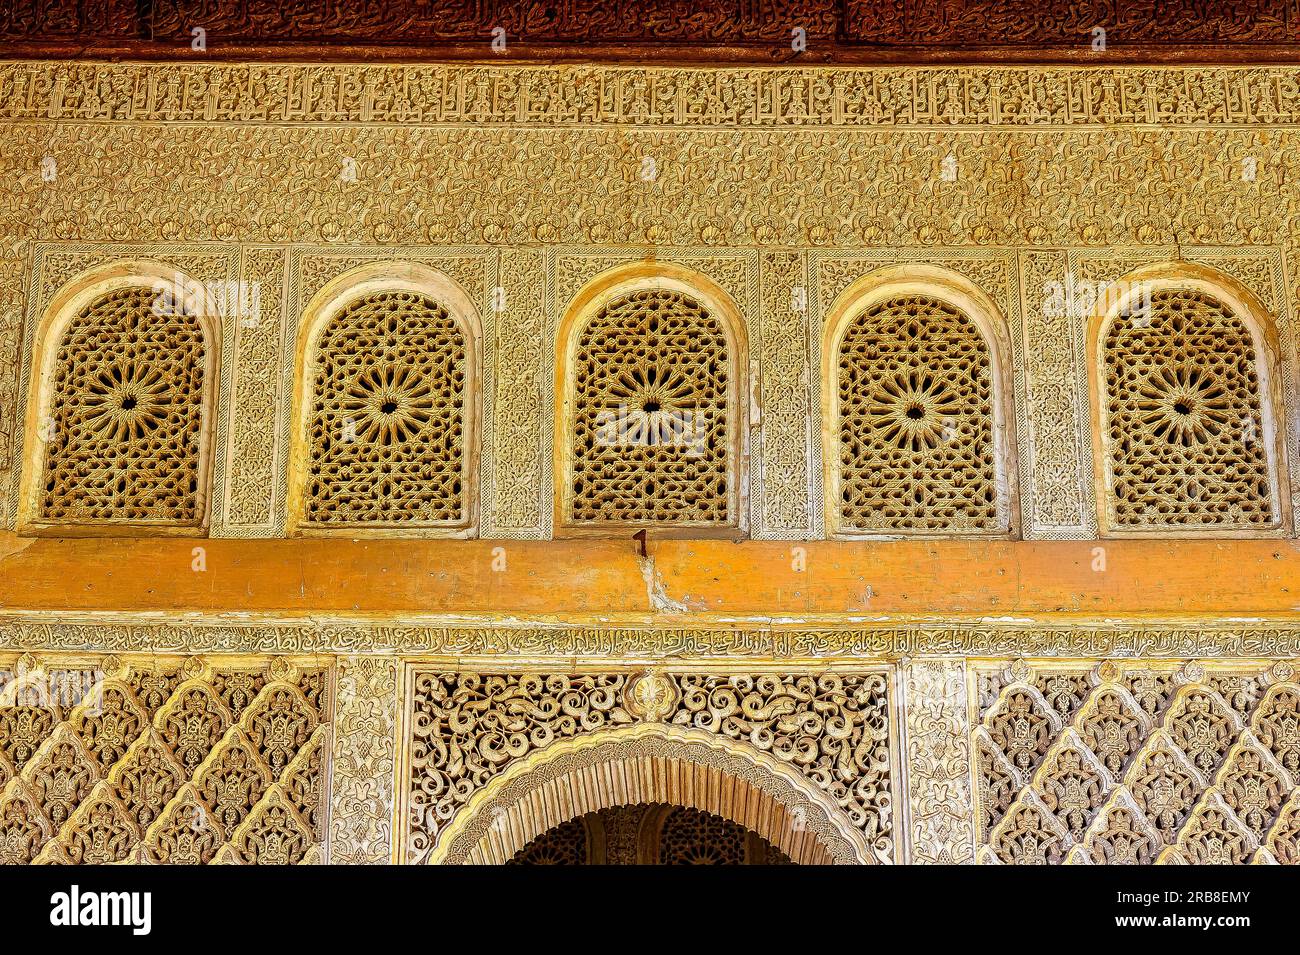 Islamic architecture in Alhambra castle and fort complex in Granada, Spain Stock Photo